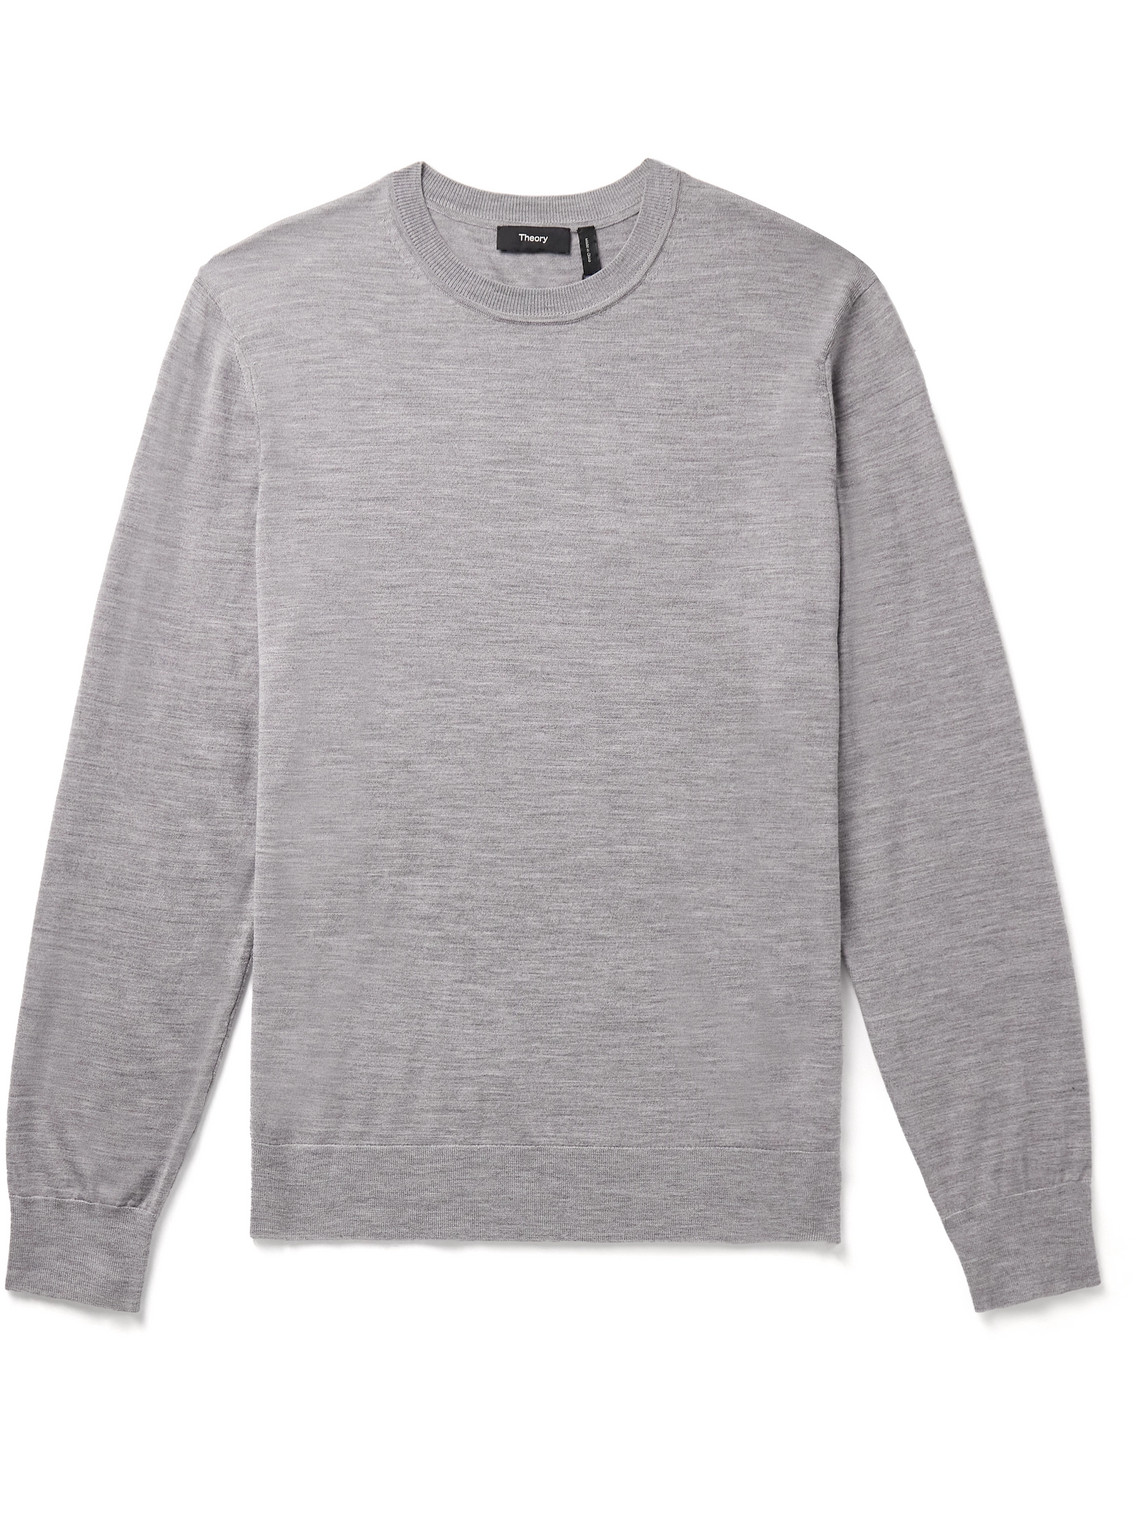 Theory - Slim-Fit Wool Sweater - Men - Gray - XL von Theory